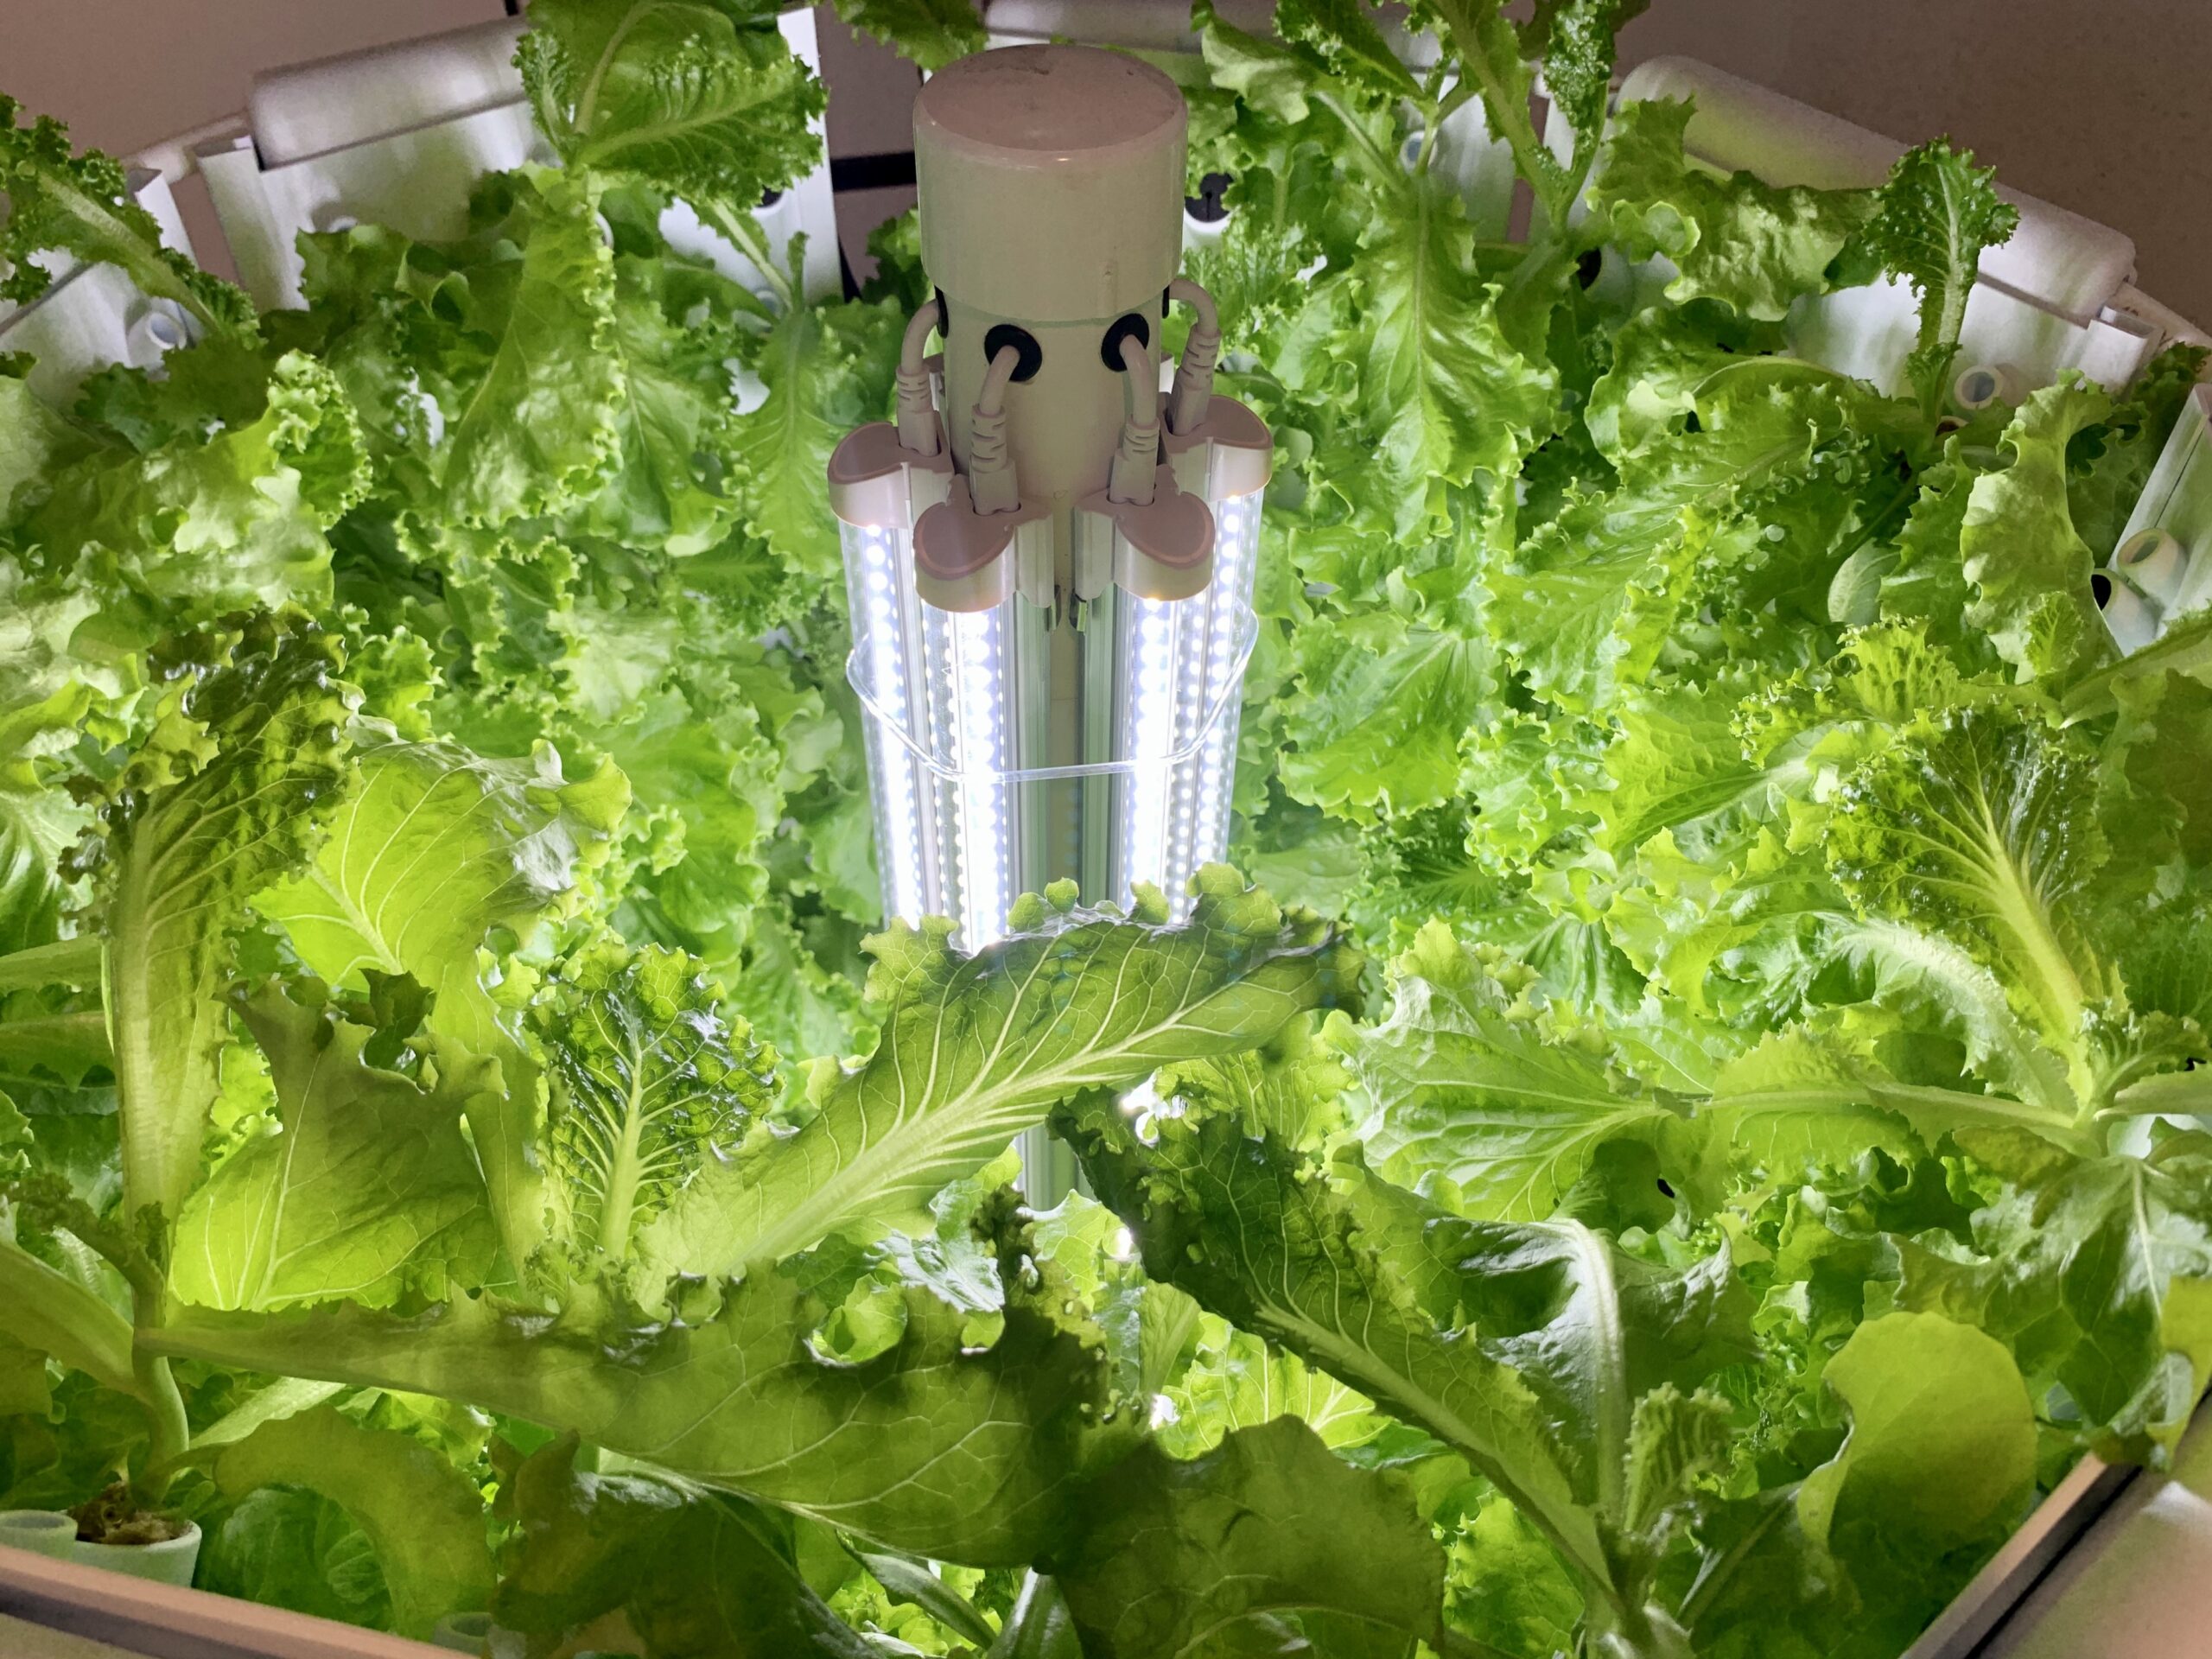 lettuce growing in the Flex Farm system